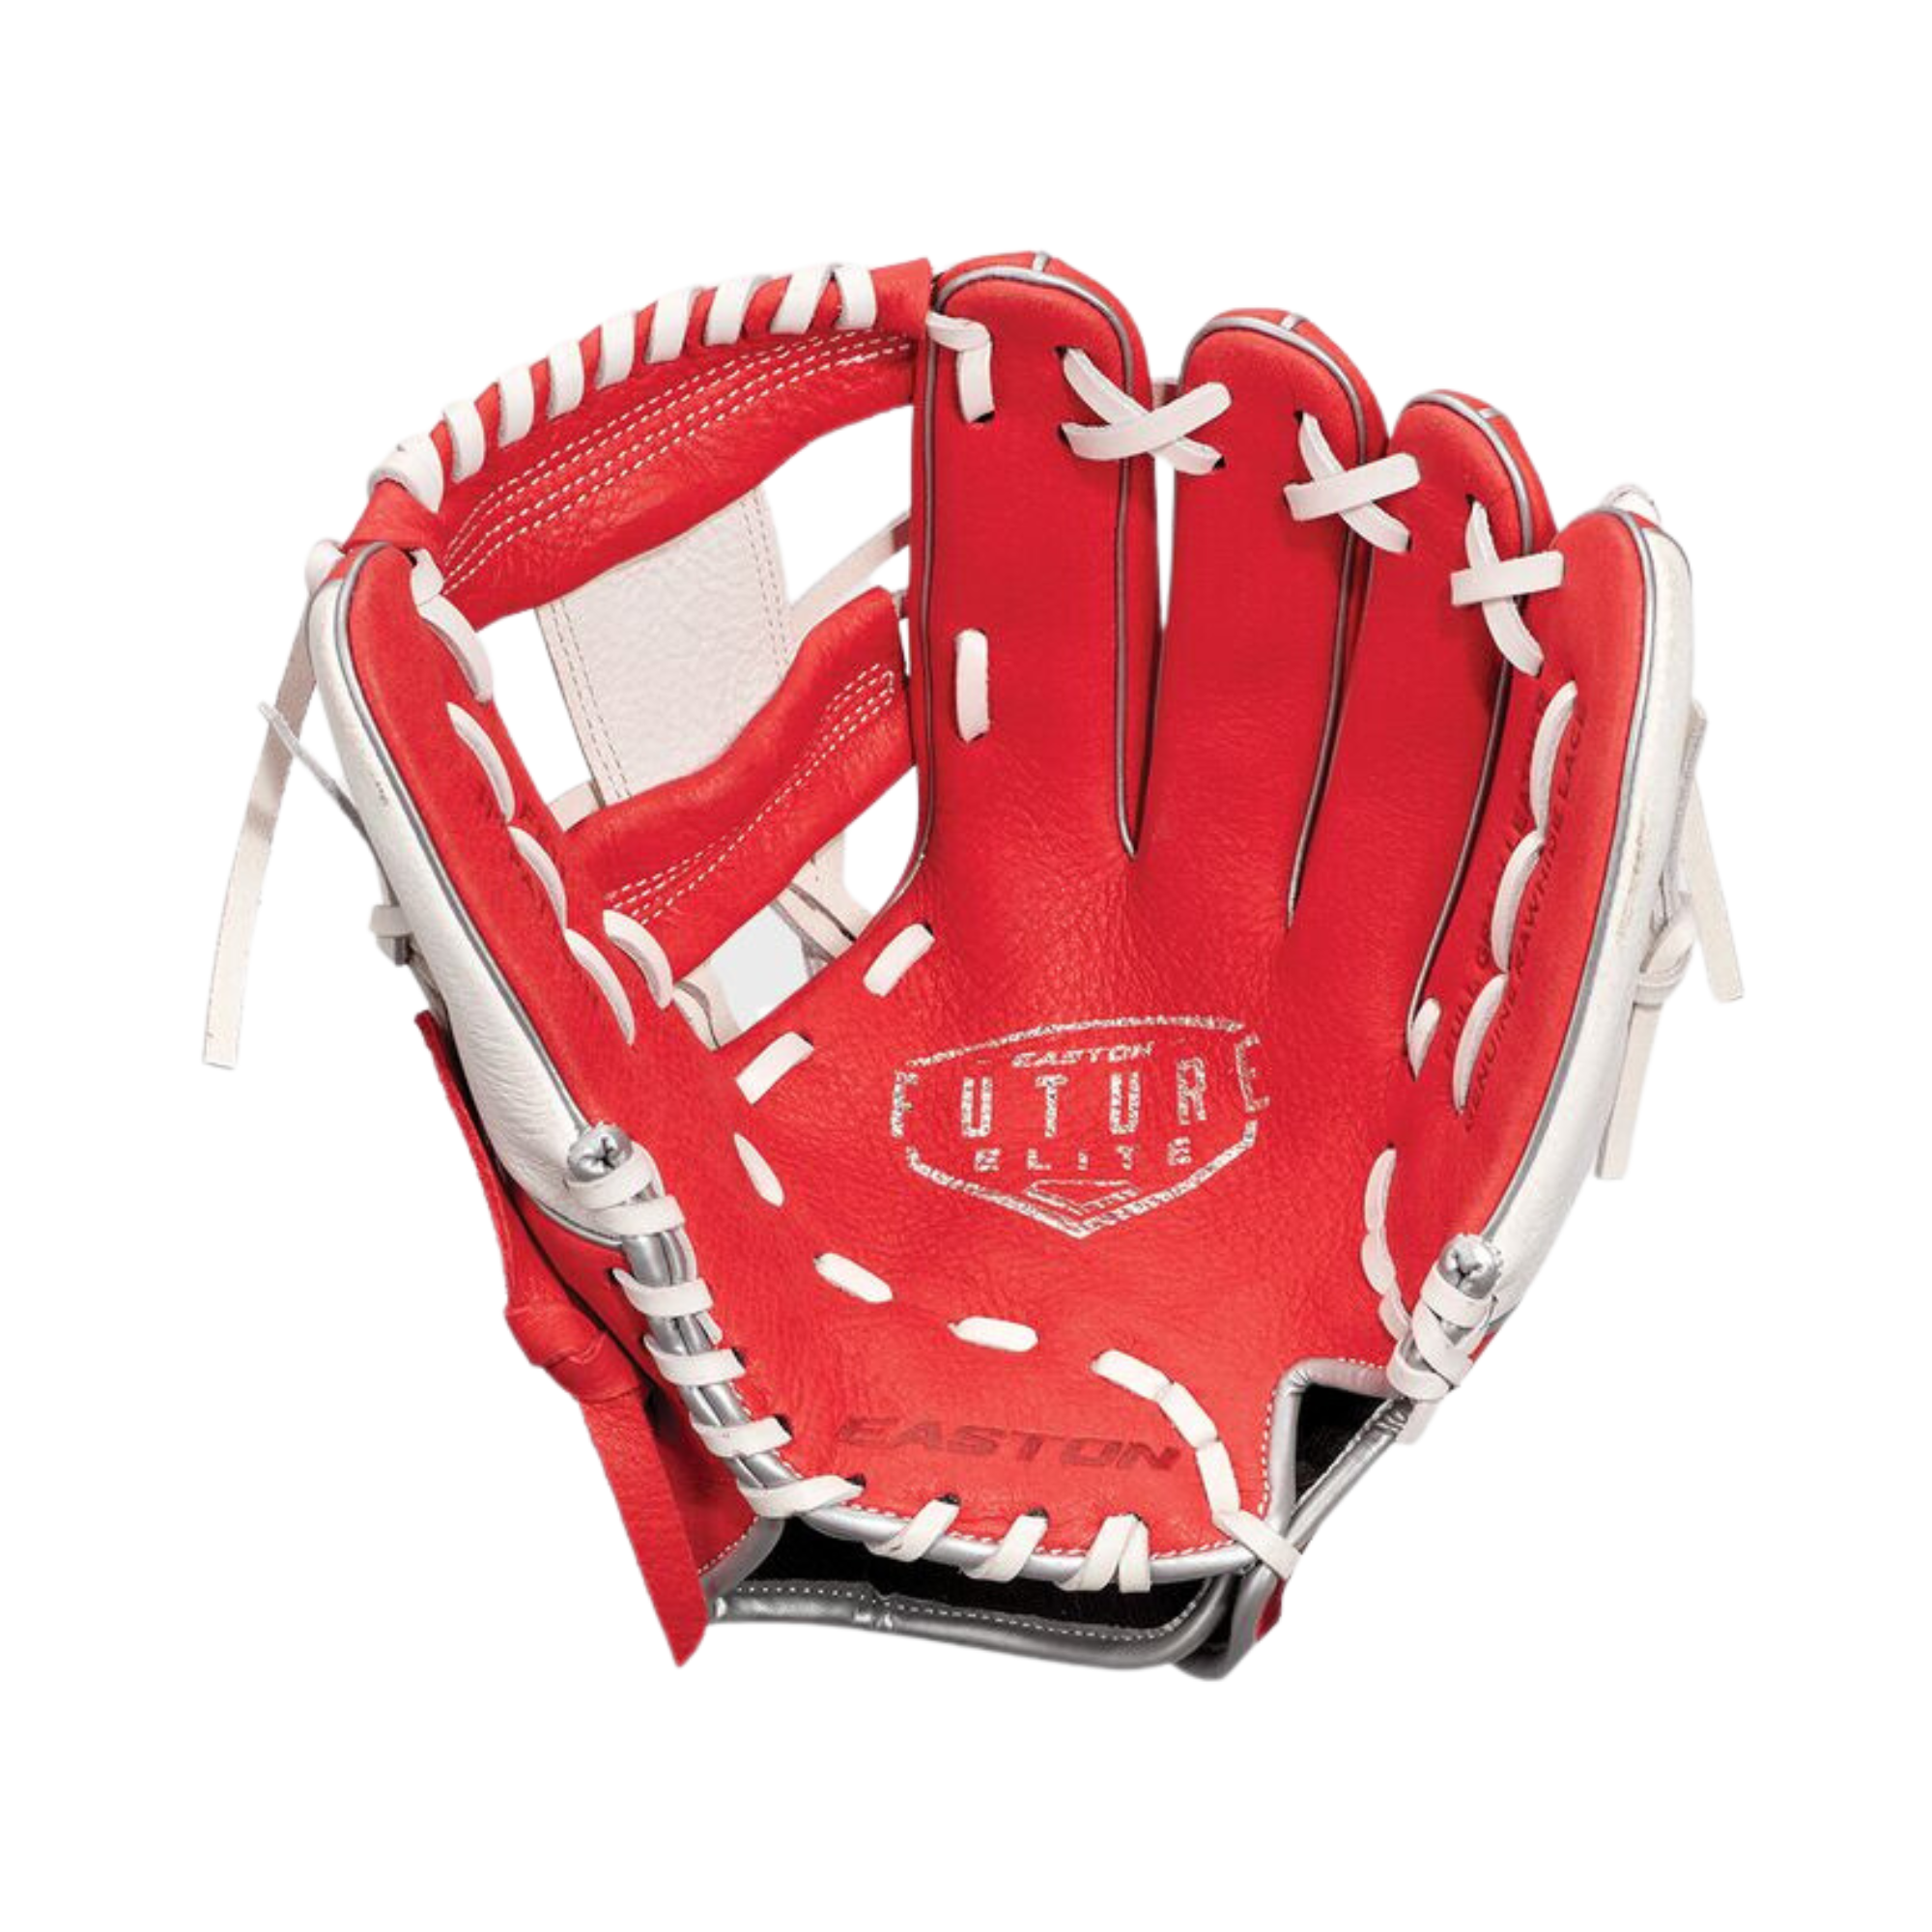 Easton Future Elite 11-inch Baseball Glove Youth LHT Red/White